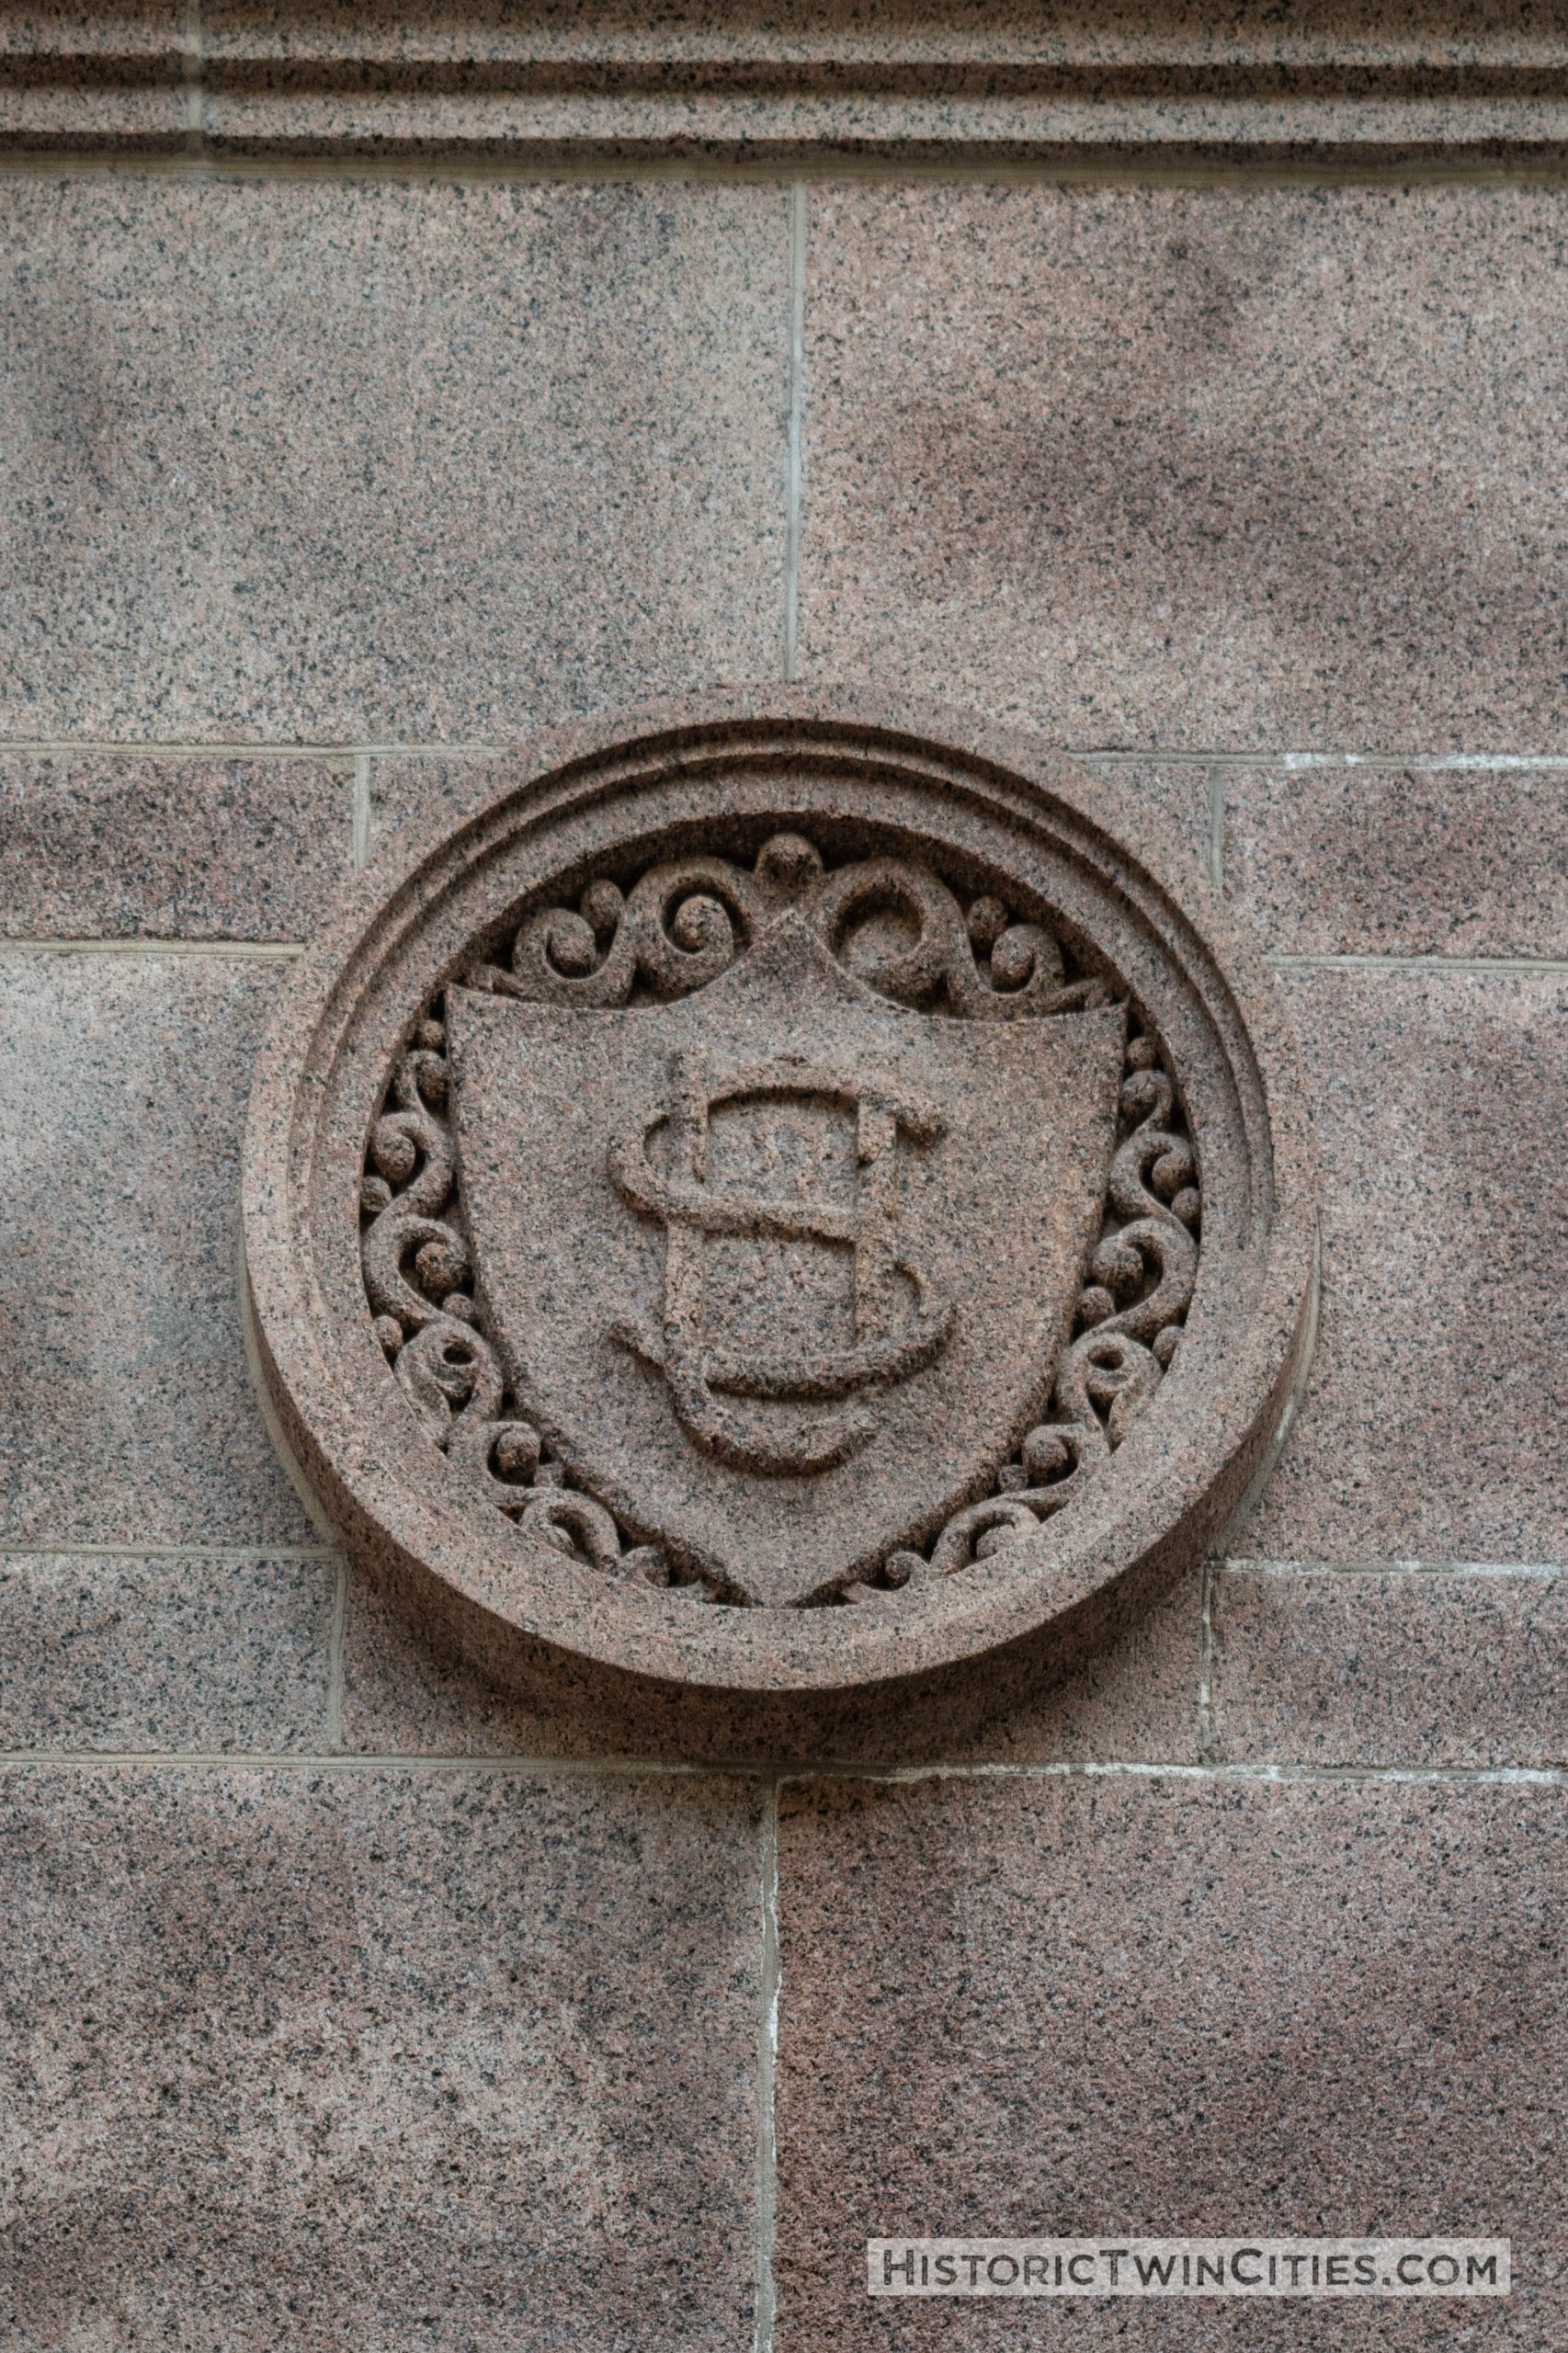 Ornate stonework on the exterior walls of the Landmark Center in St. Paul, MN